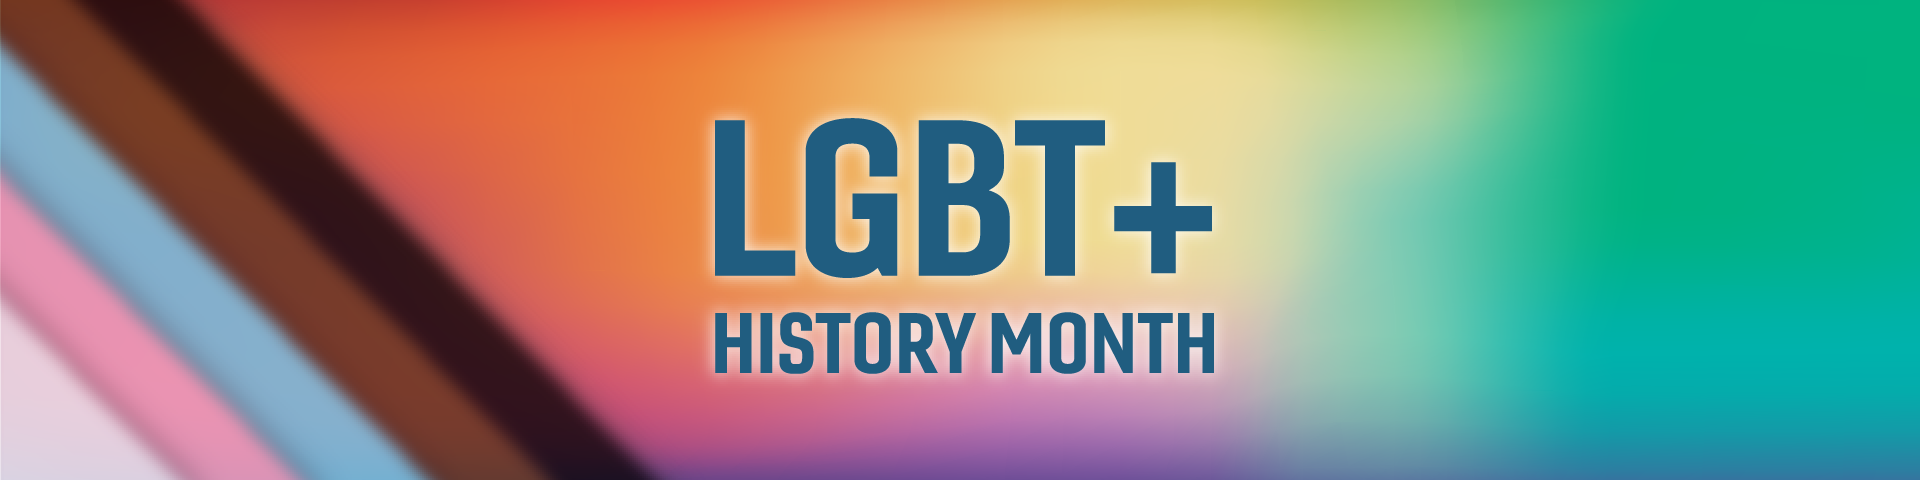 LGBT+ History Month - Flag Banner